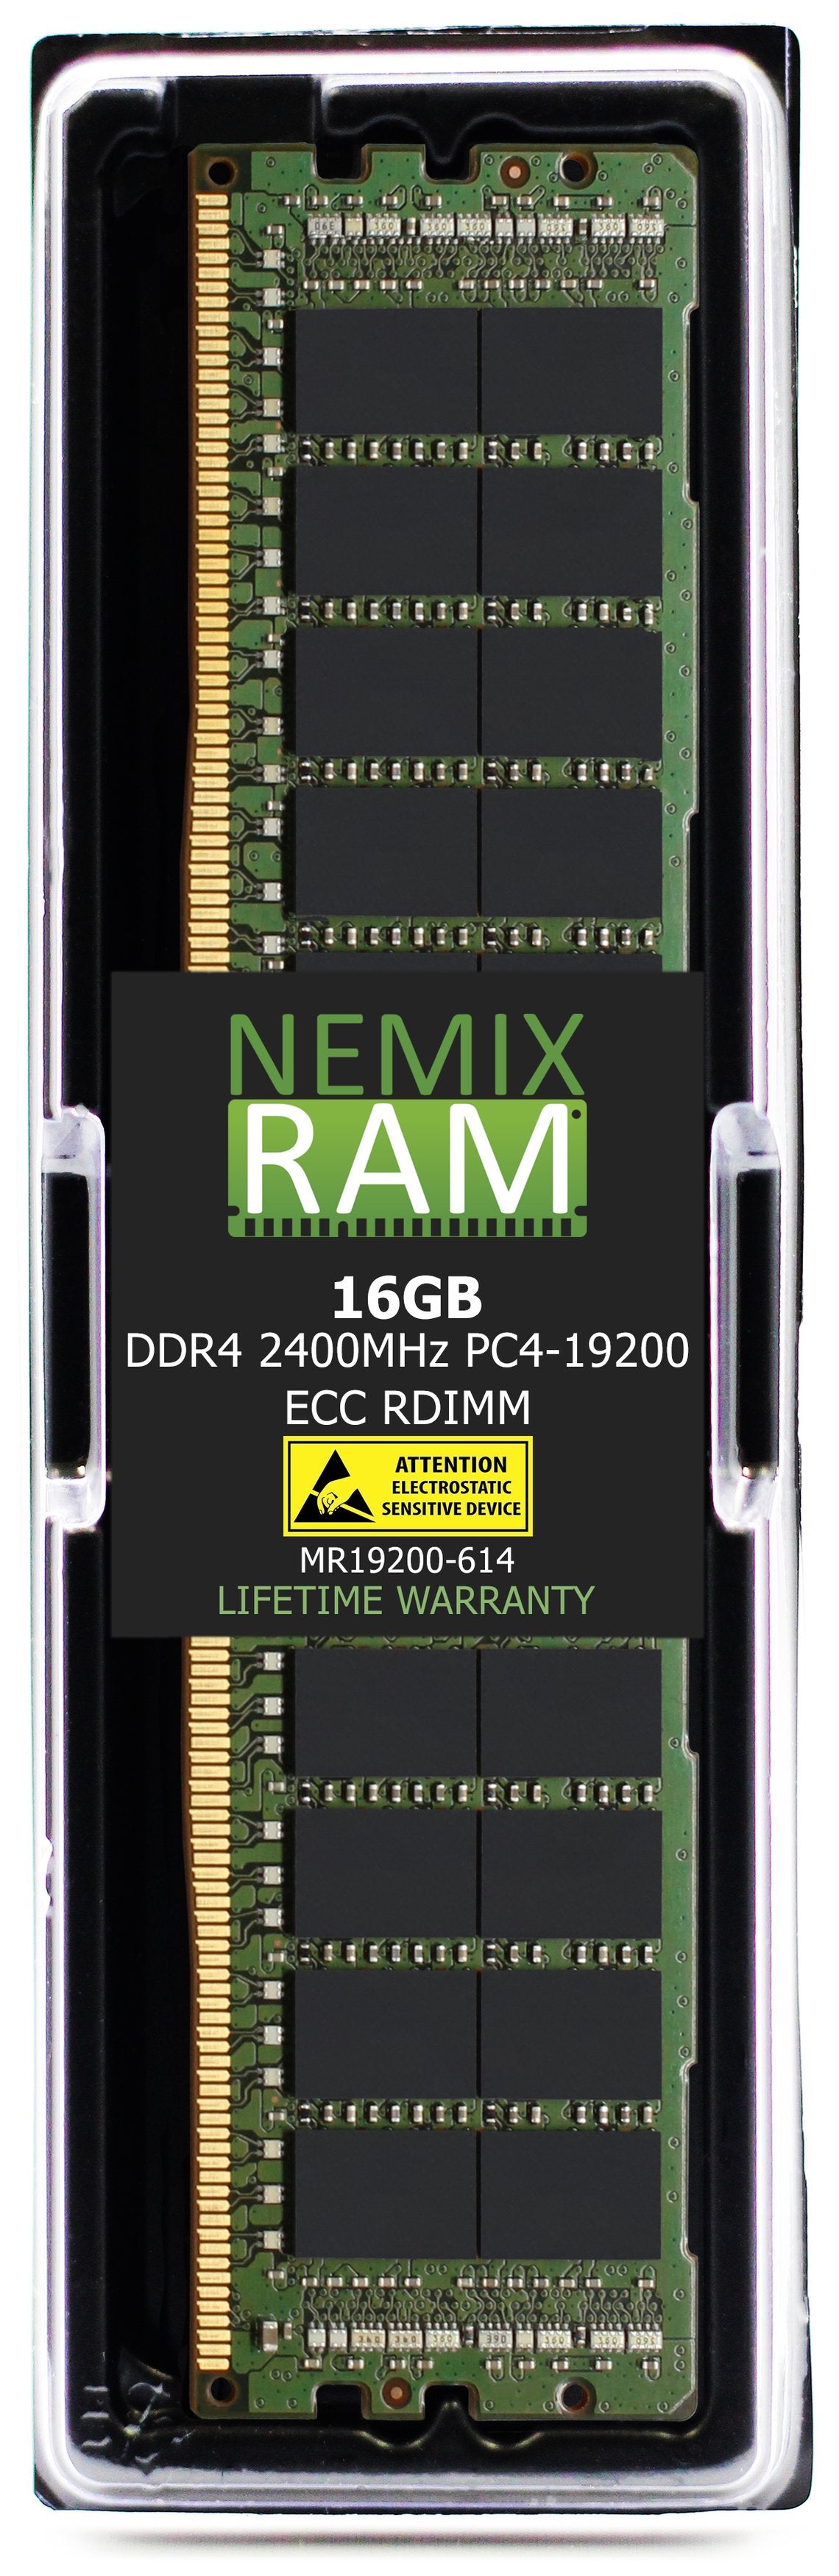 16GB DDR4 2400MHZ PC4-19200 RDIMM Compatible with Supermicro MEM-DR416L-SL02-ER24